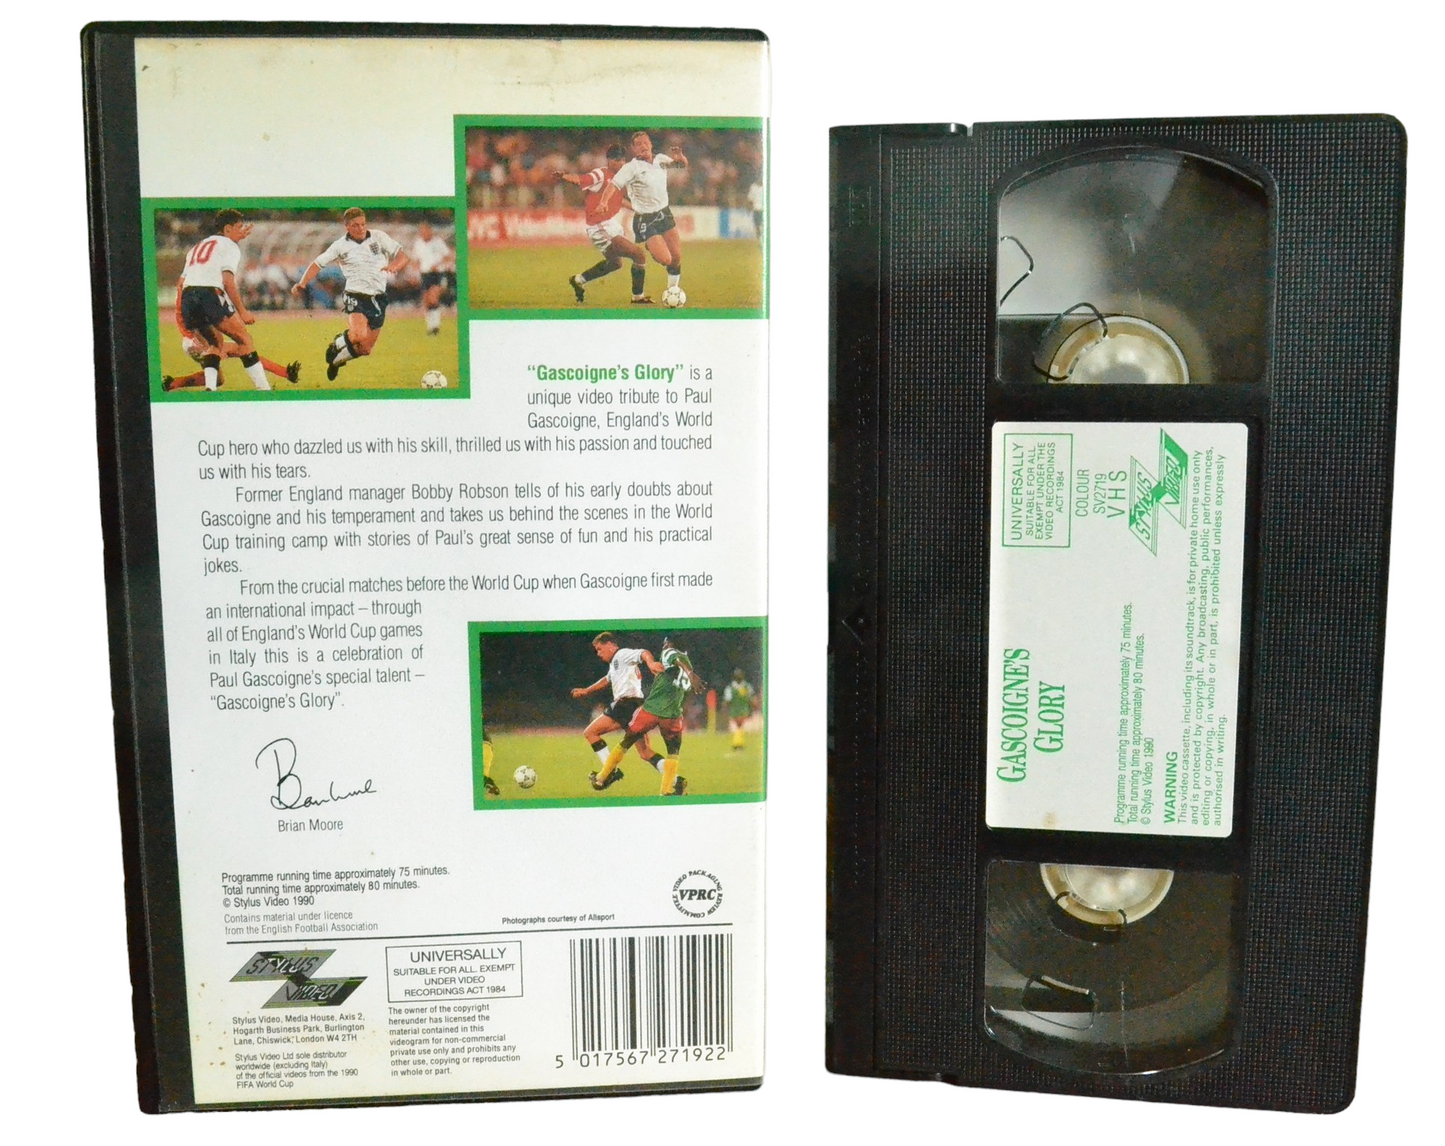 Gascoigner's Glory - Stylus Video - SV2719 - Sport - Pal - VHS-